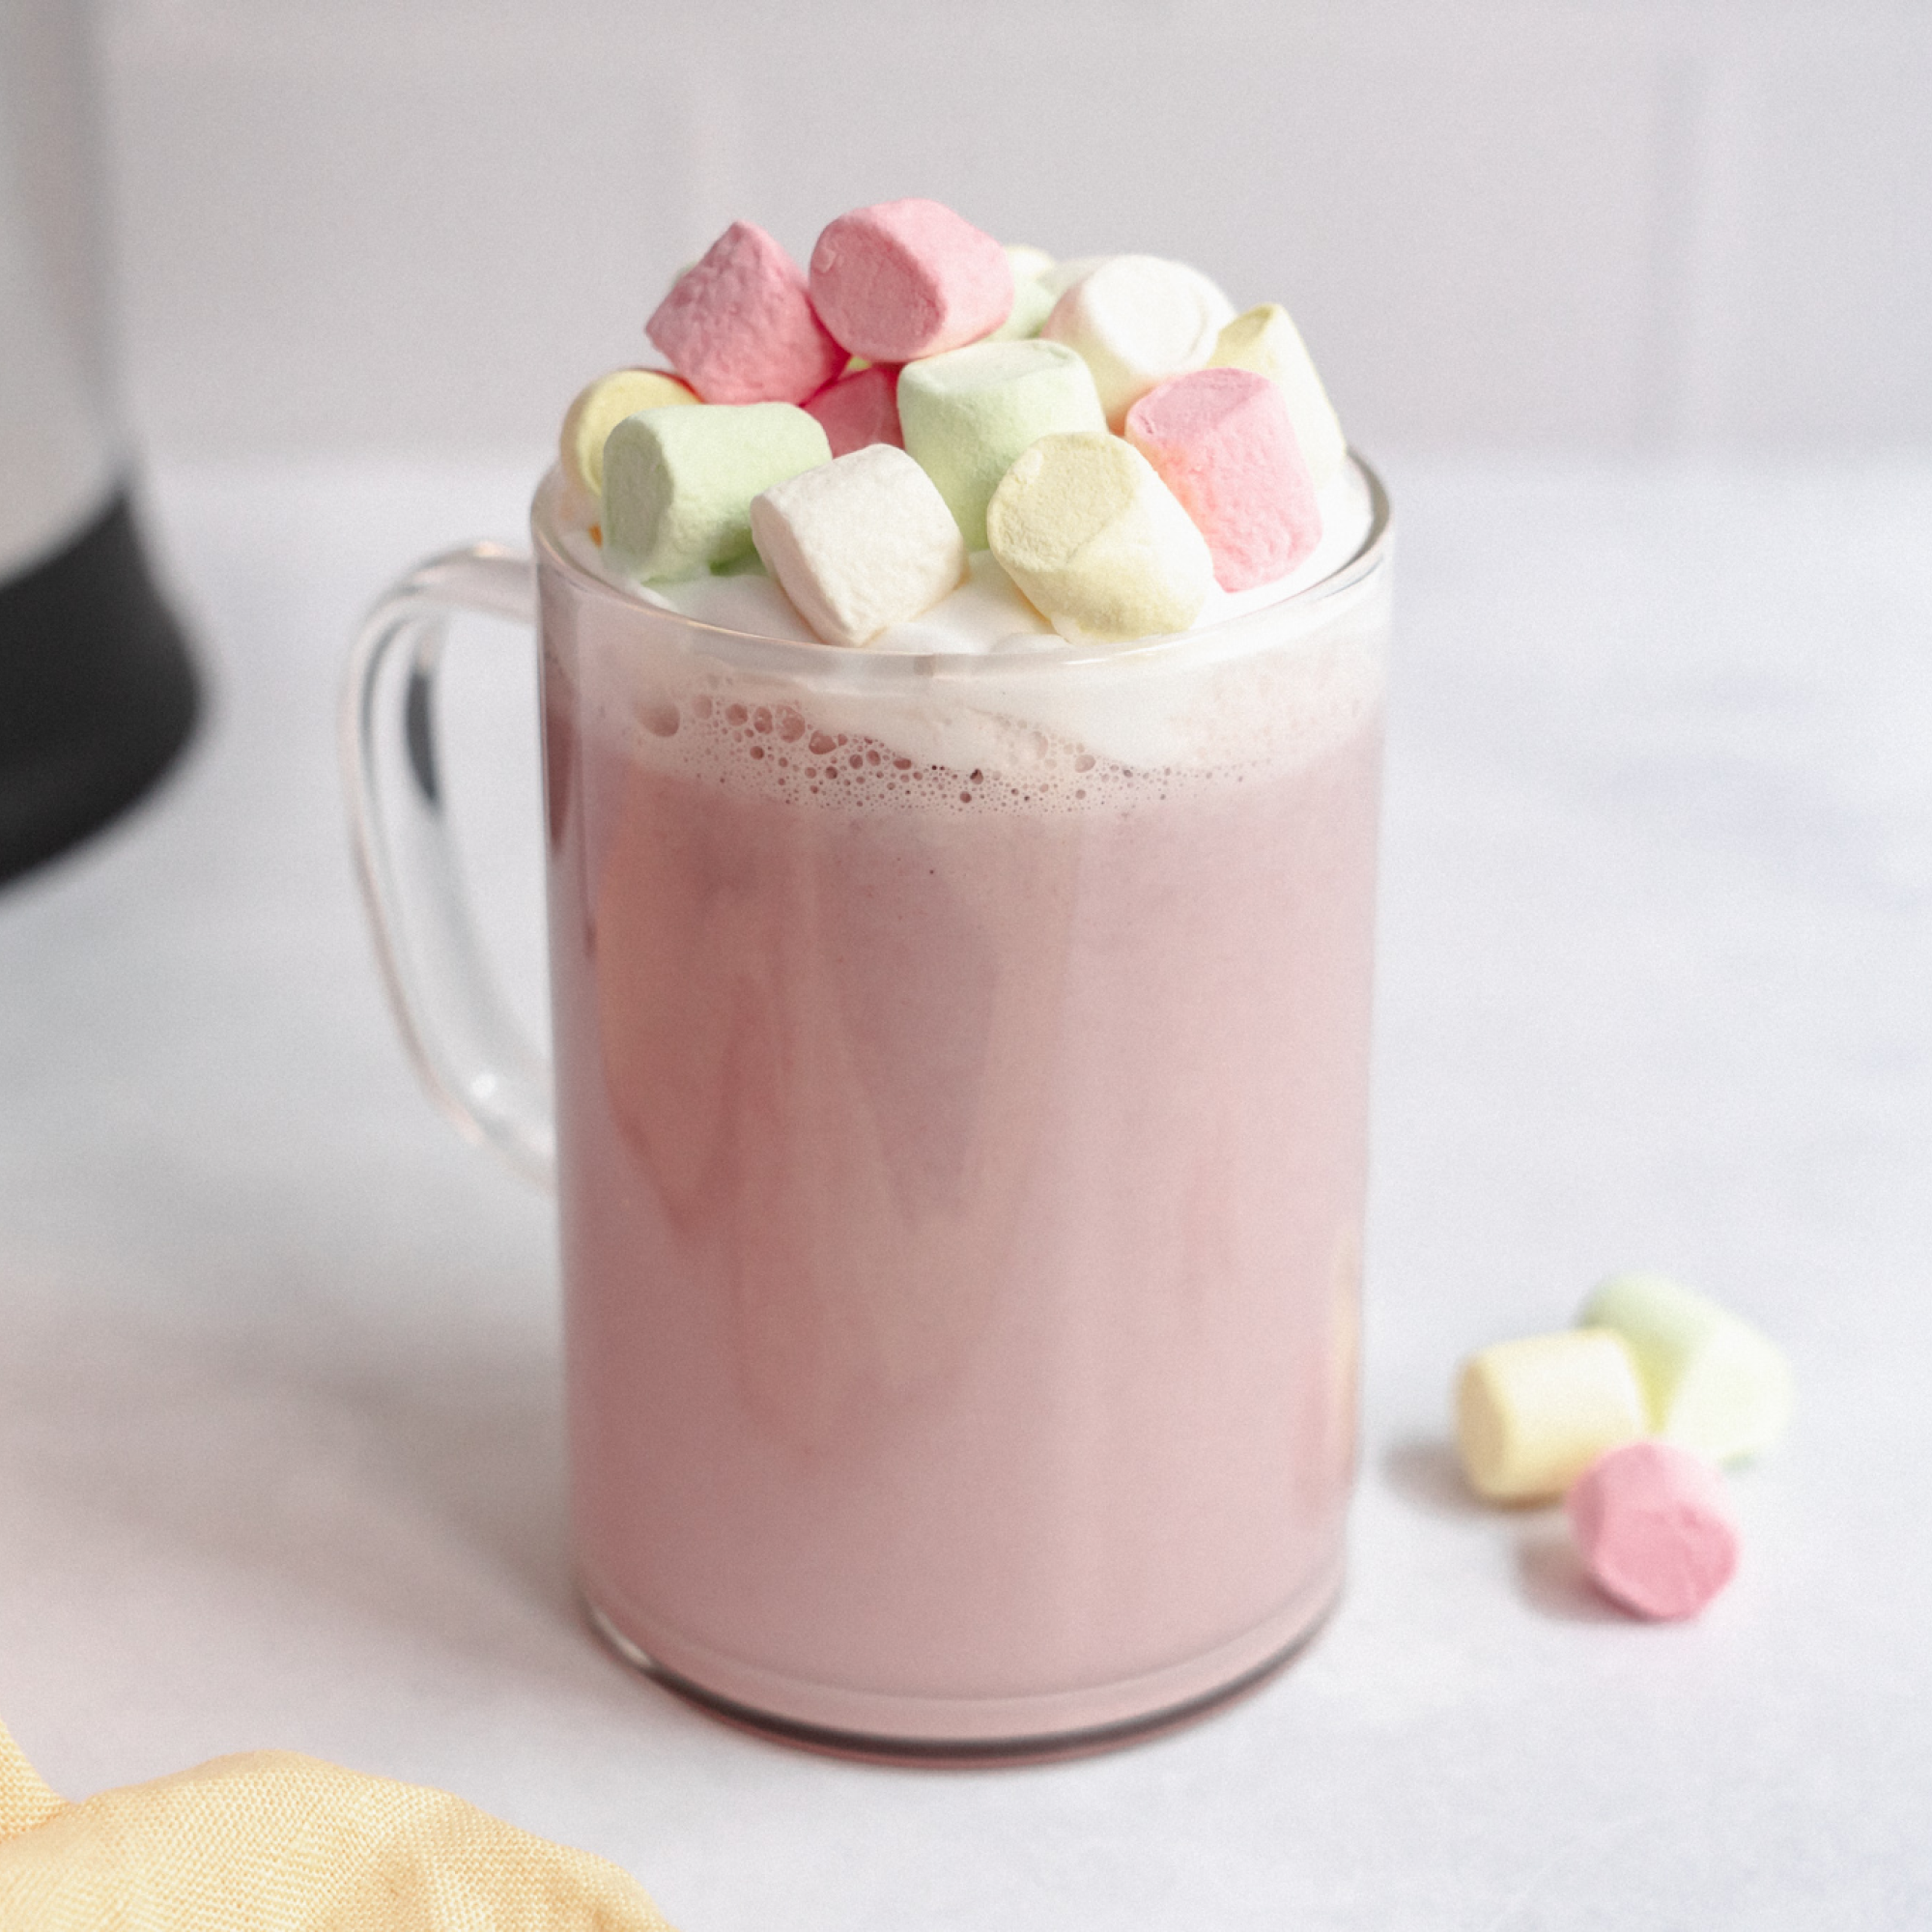 Unicorn Hot Chocolate recipe